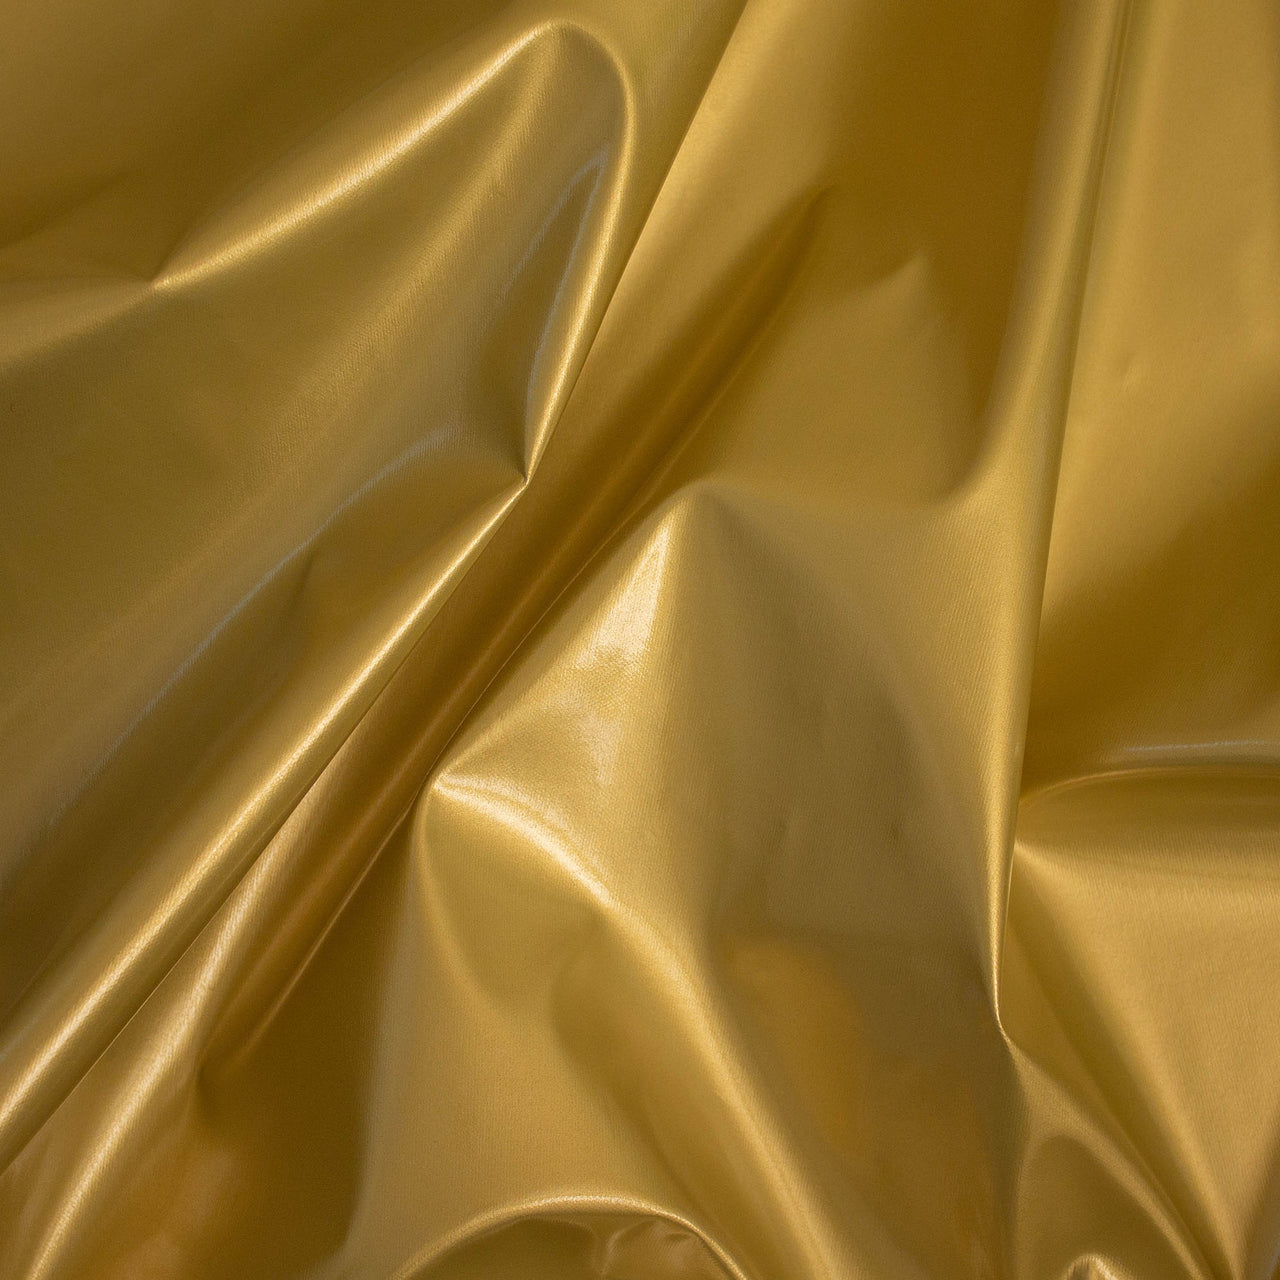 Gold PVC Shiny Stretch Fabric - 1 Way Natural Stretch - PU Coated